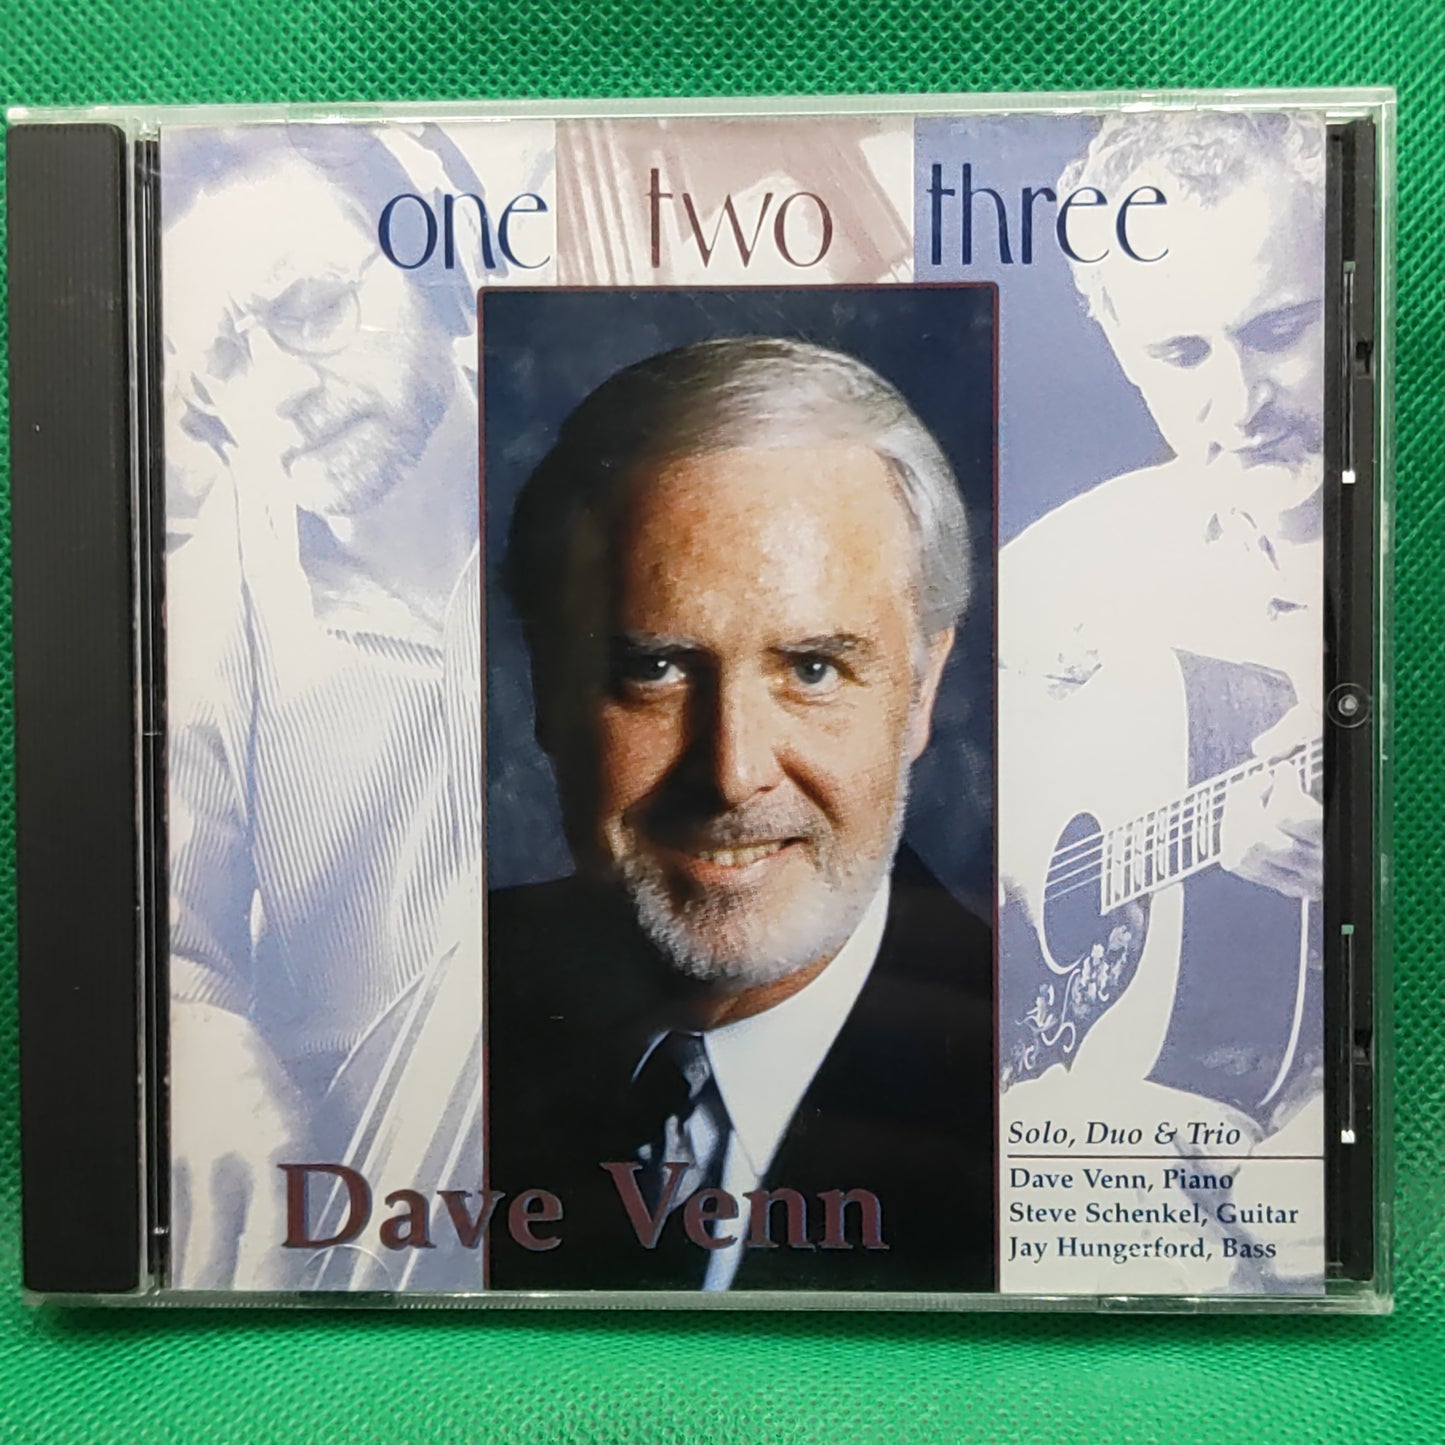 Dave Venn - One two three